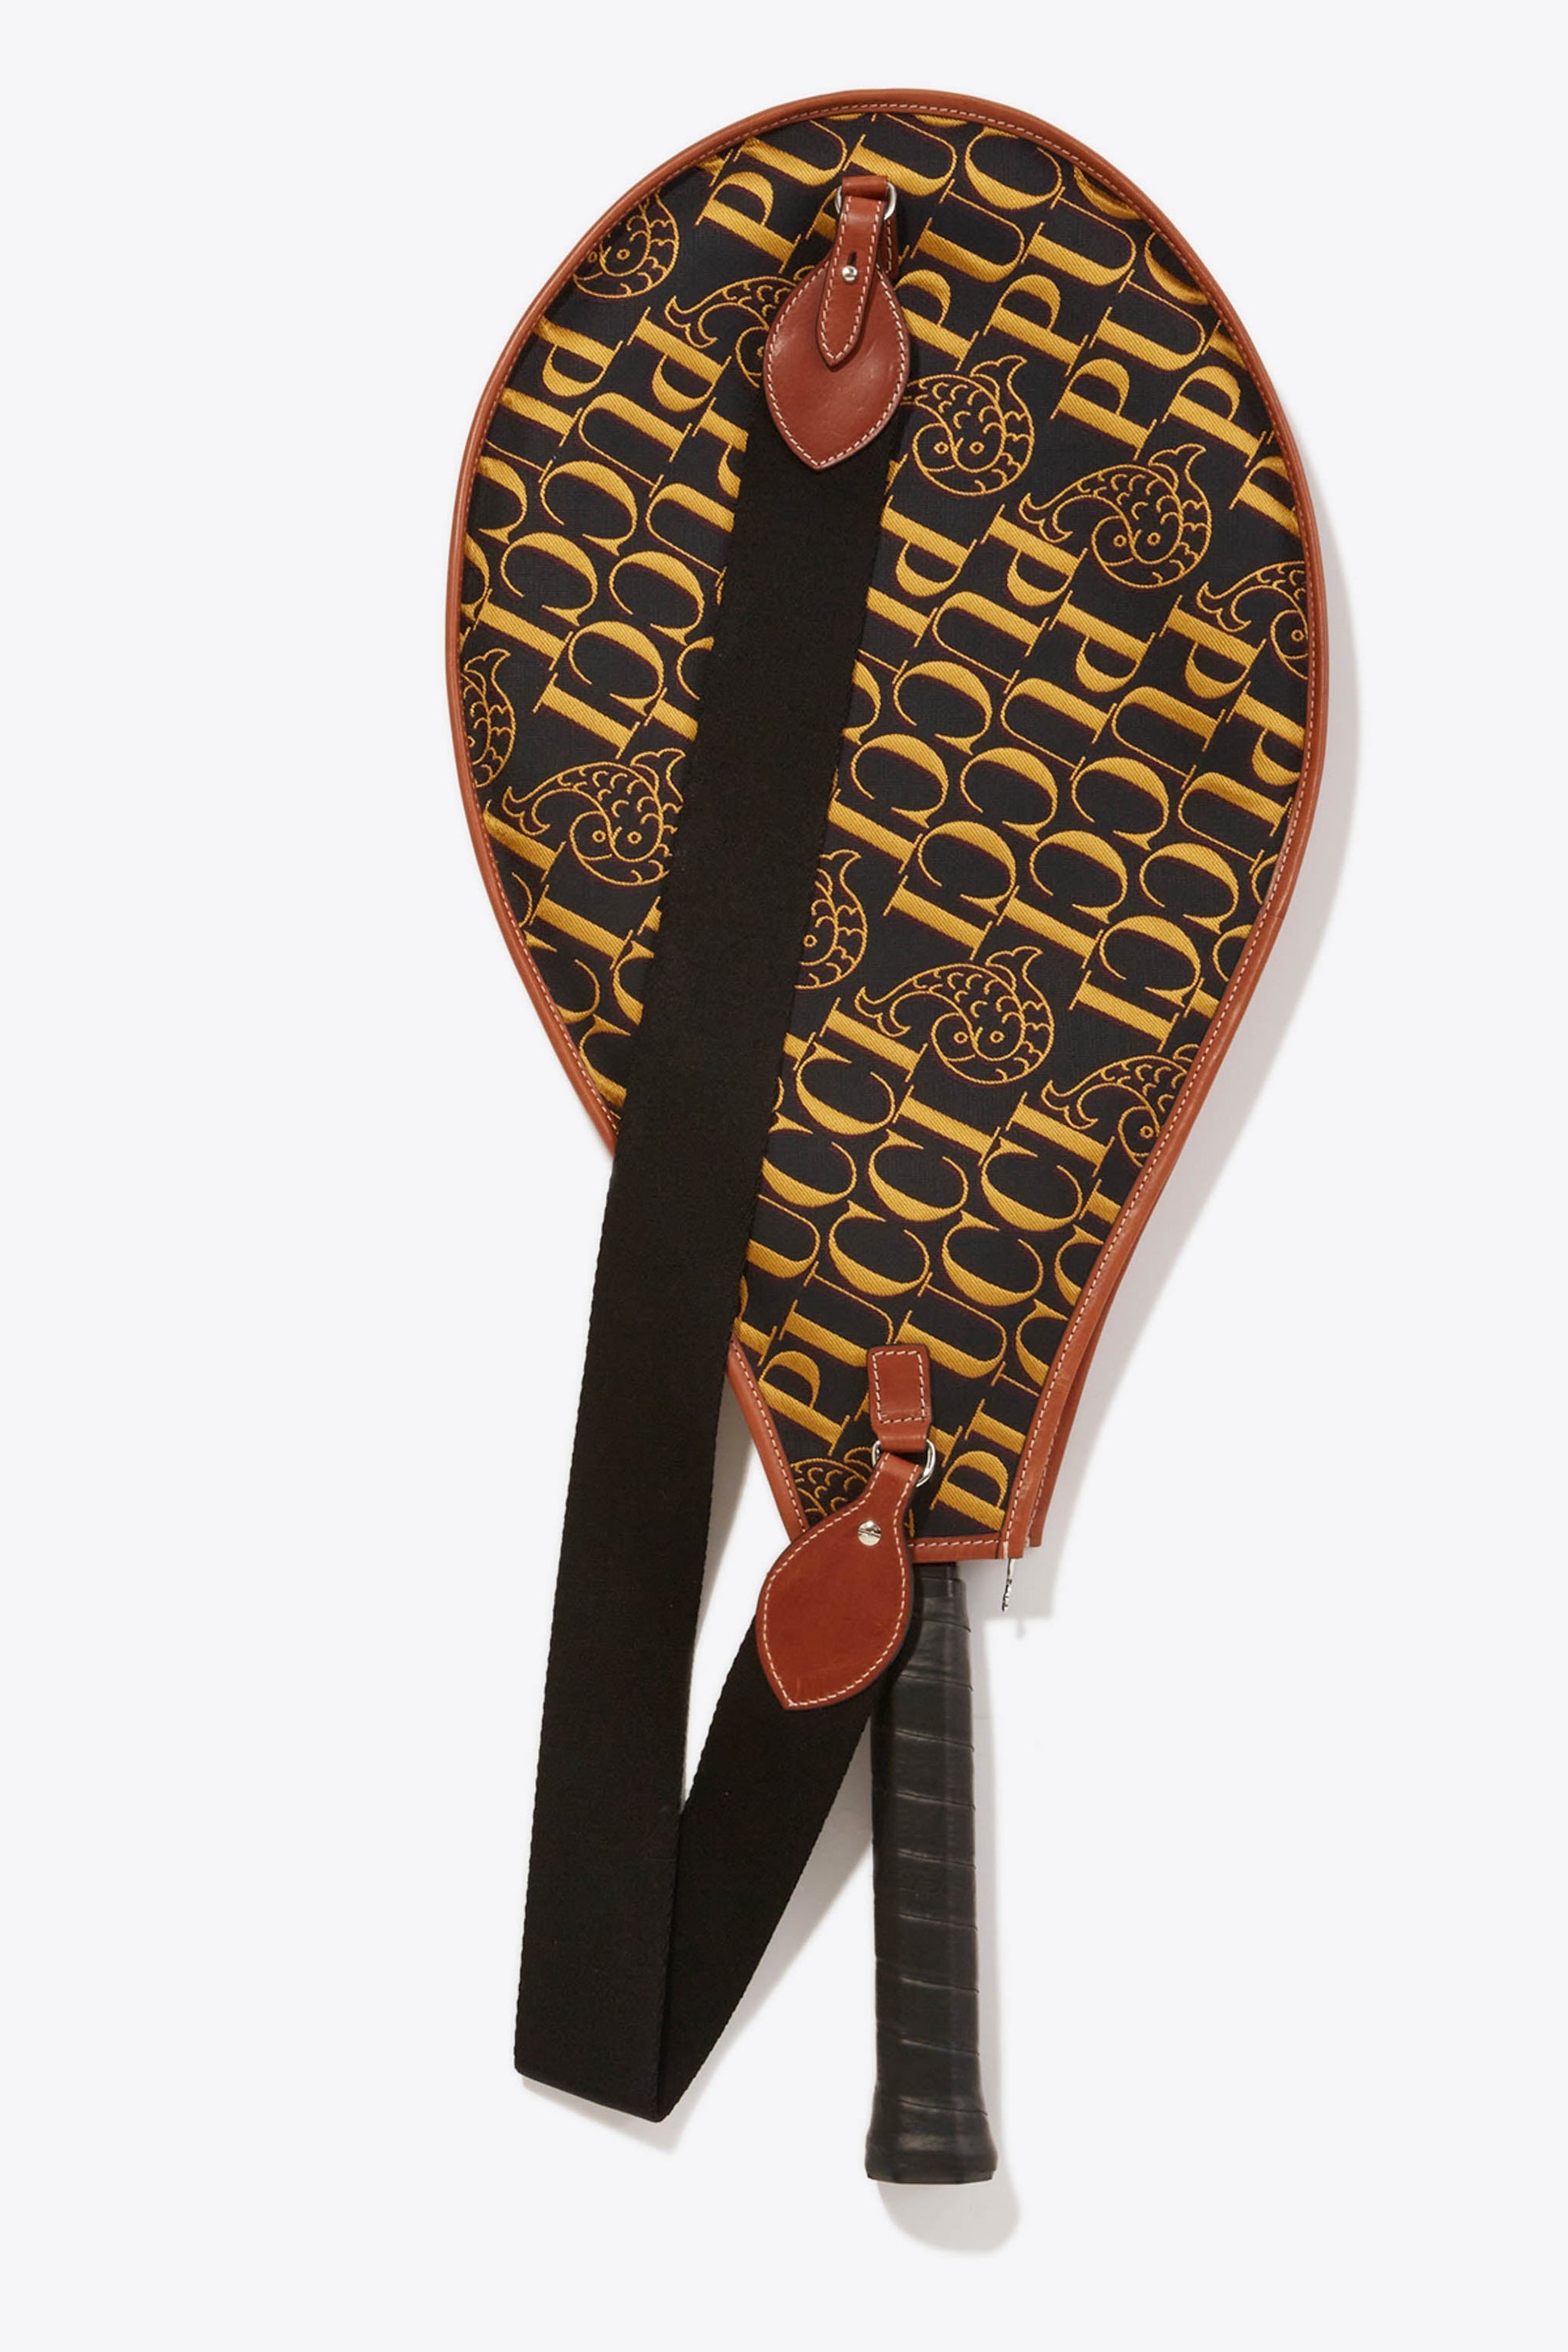 LOUIS VUITTON Monogram Canvas Tennis Racket Cover - Brown